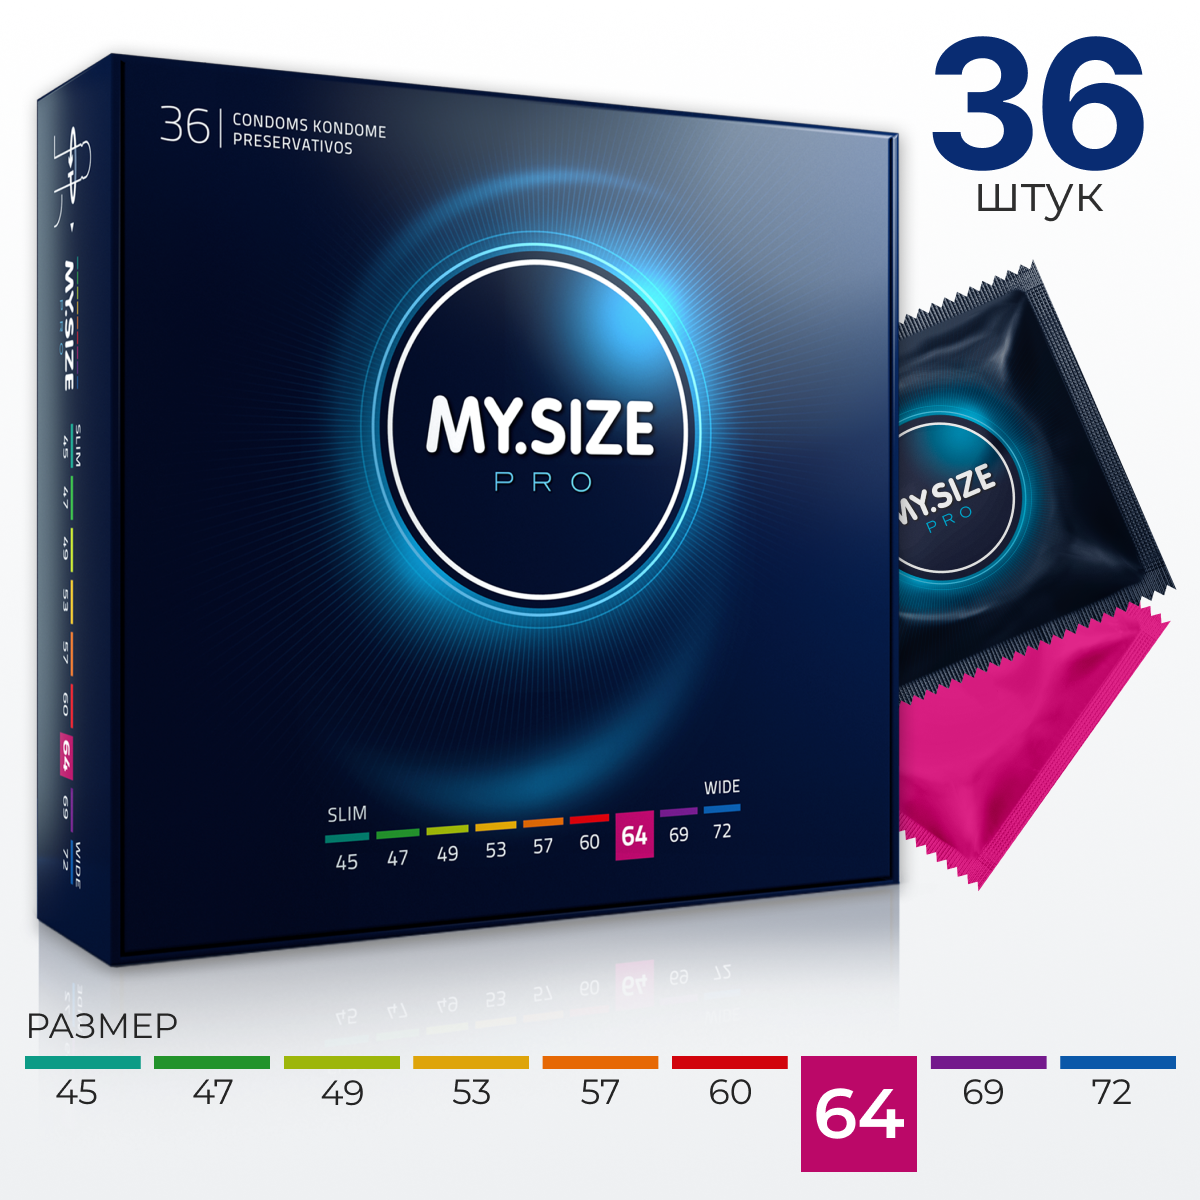 Презервативы "MY.SIZE" №36 размер 64 (ширина 64mm)